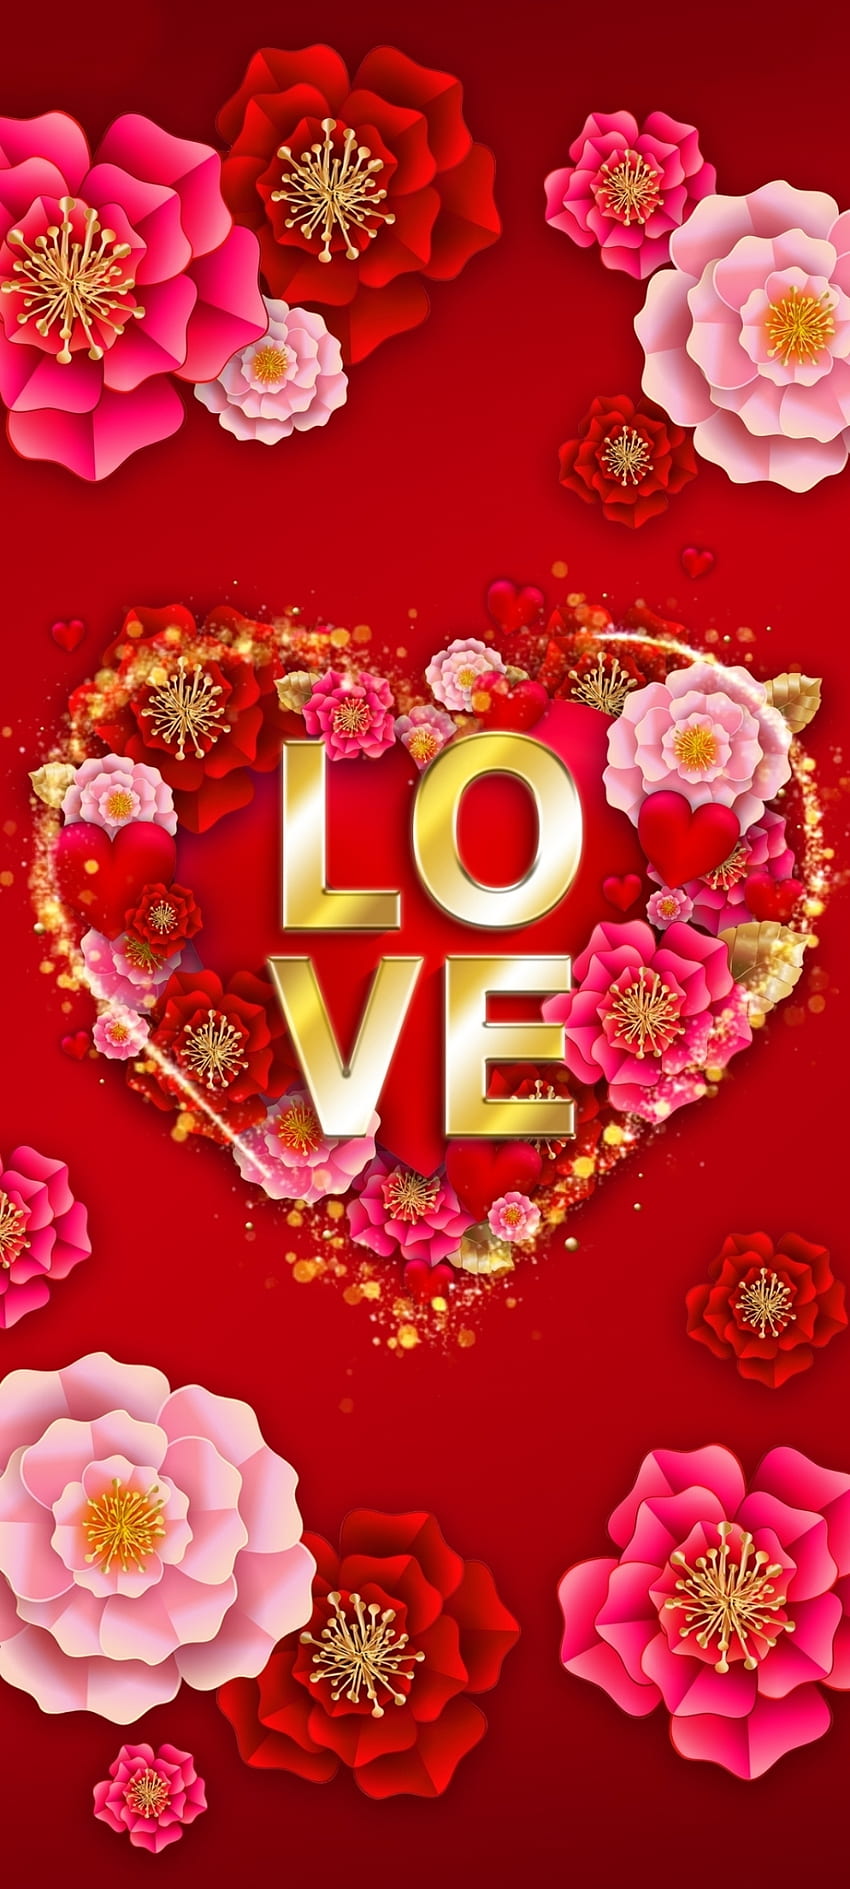 Give Love flowers, Heart, red, beautiful, magenta, premium ...